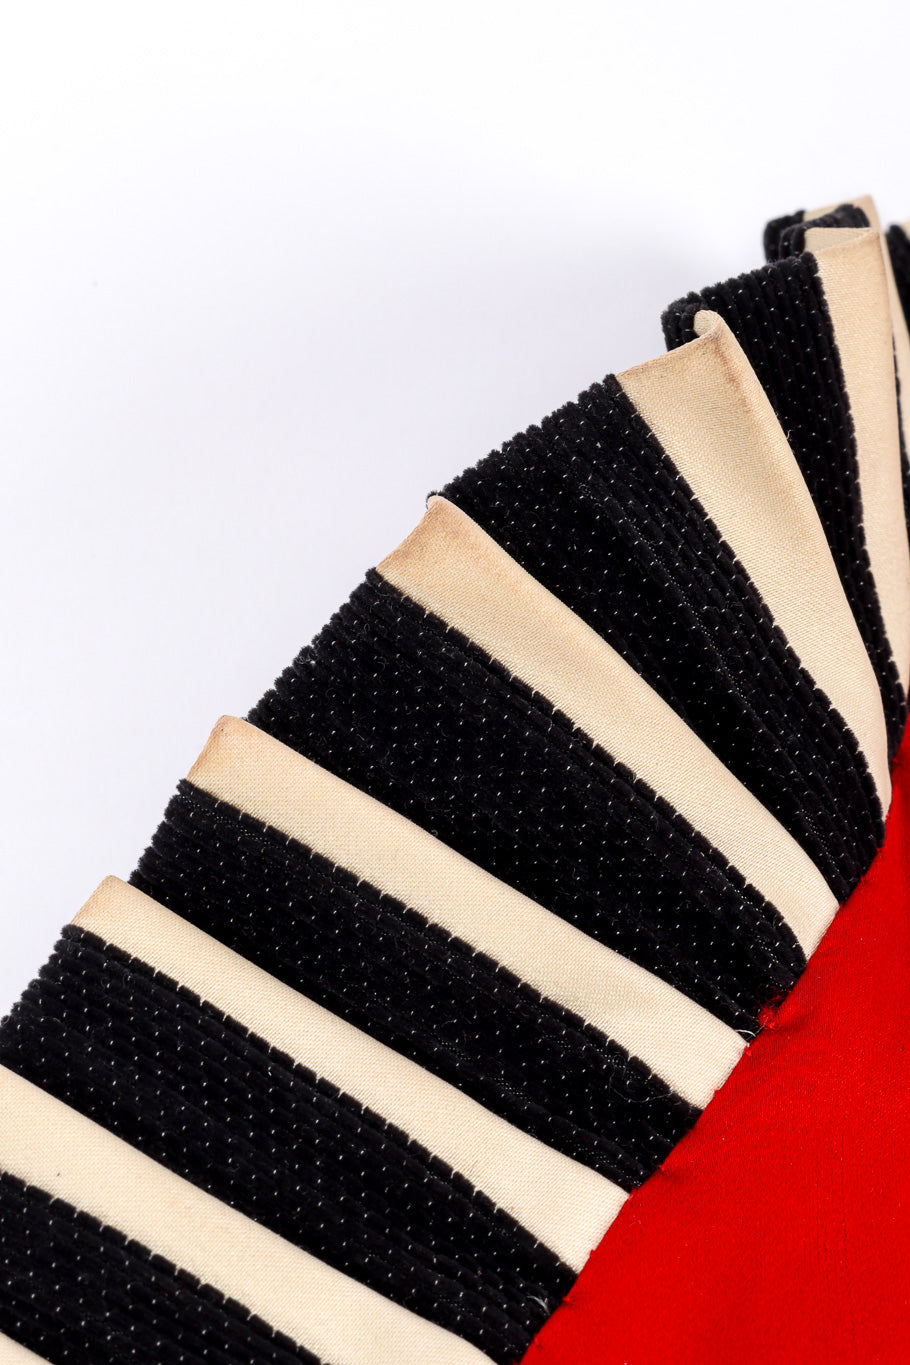 Vintage Bill Blass Striped Bolero Jacket stain on collar @recessla